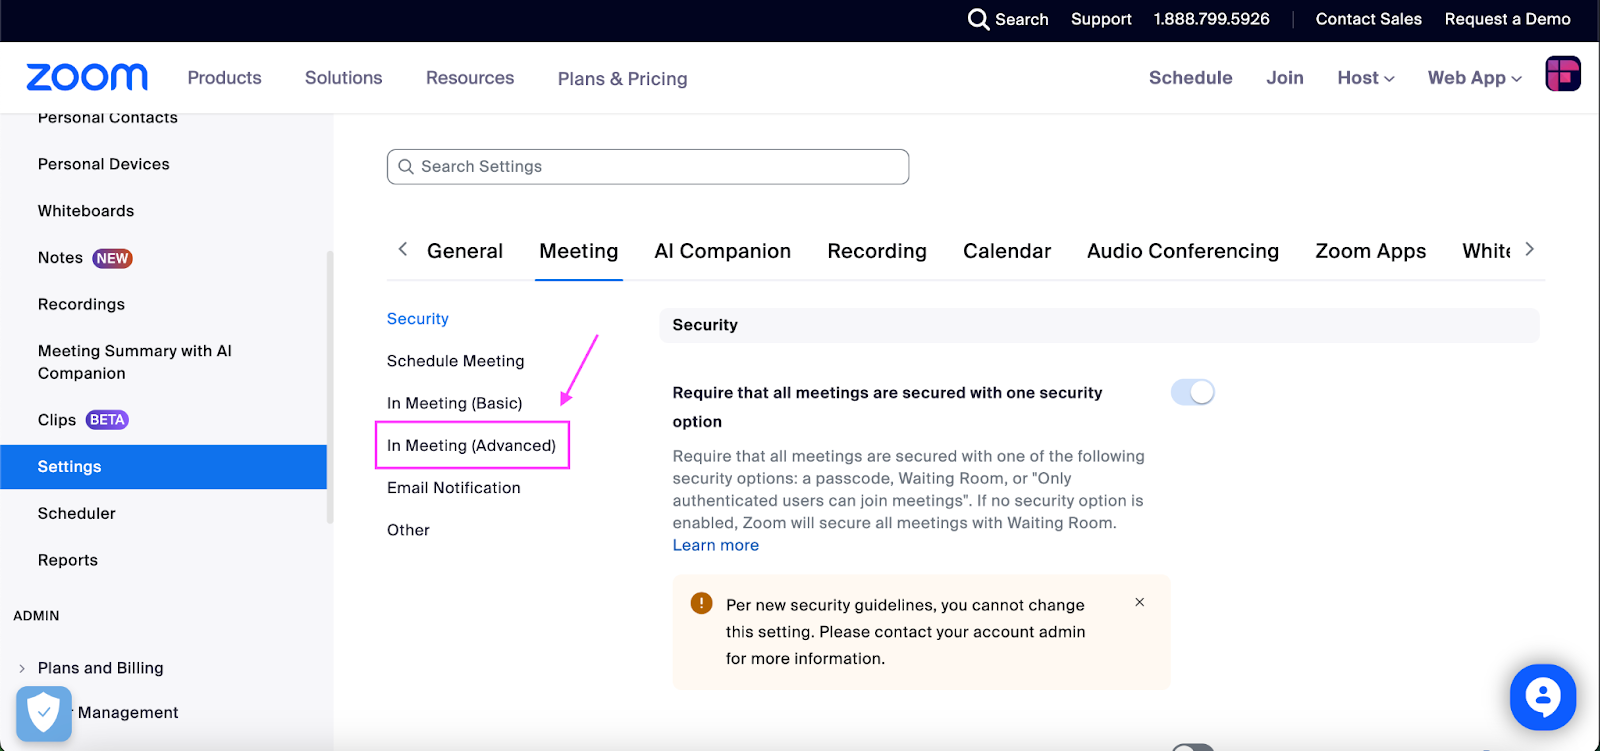 Zoom meeting transcript - Zoom in meeting (advanced) settings